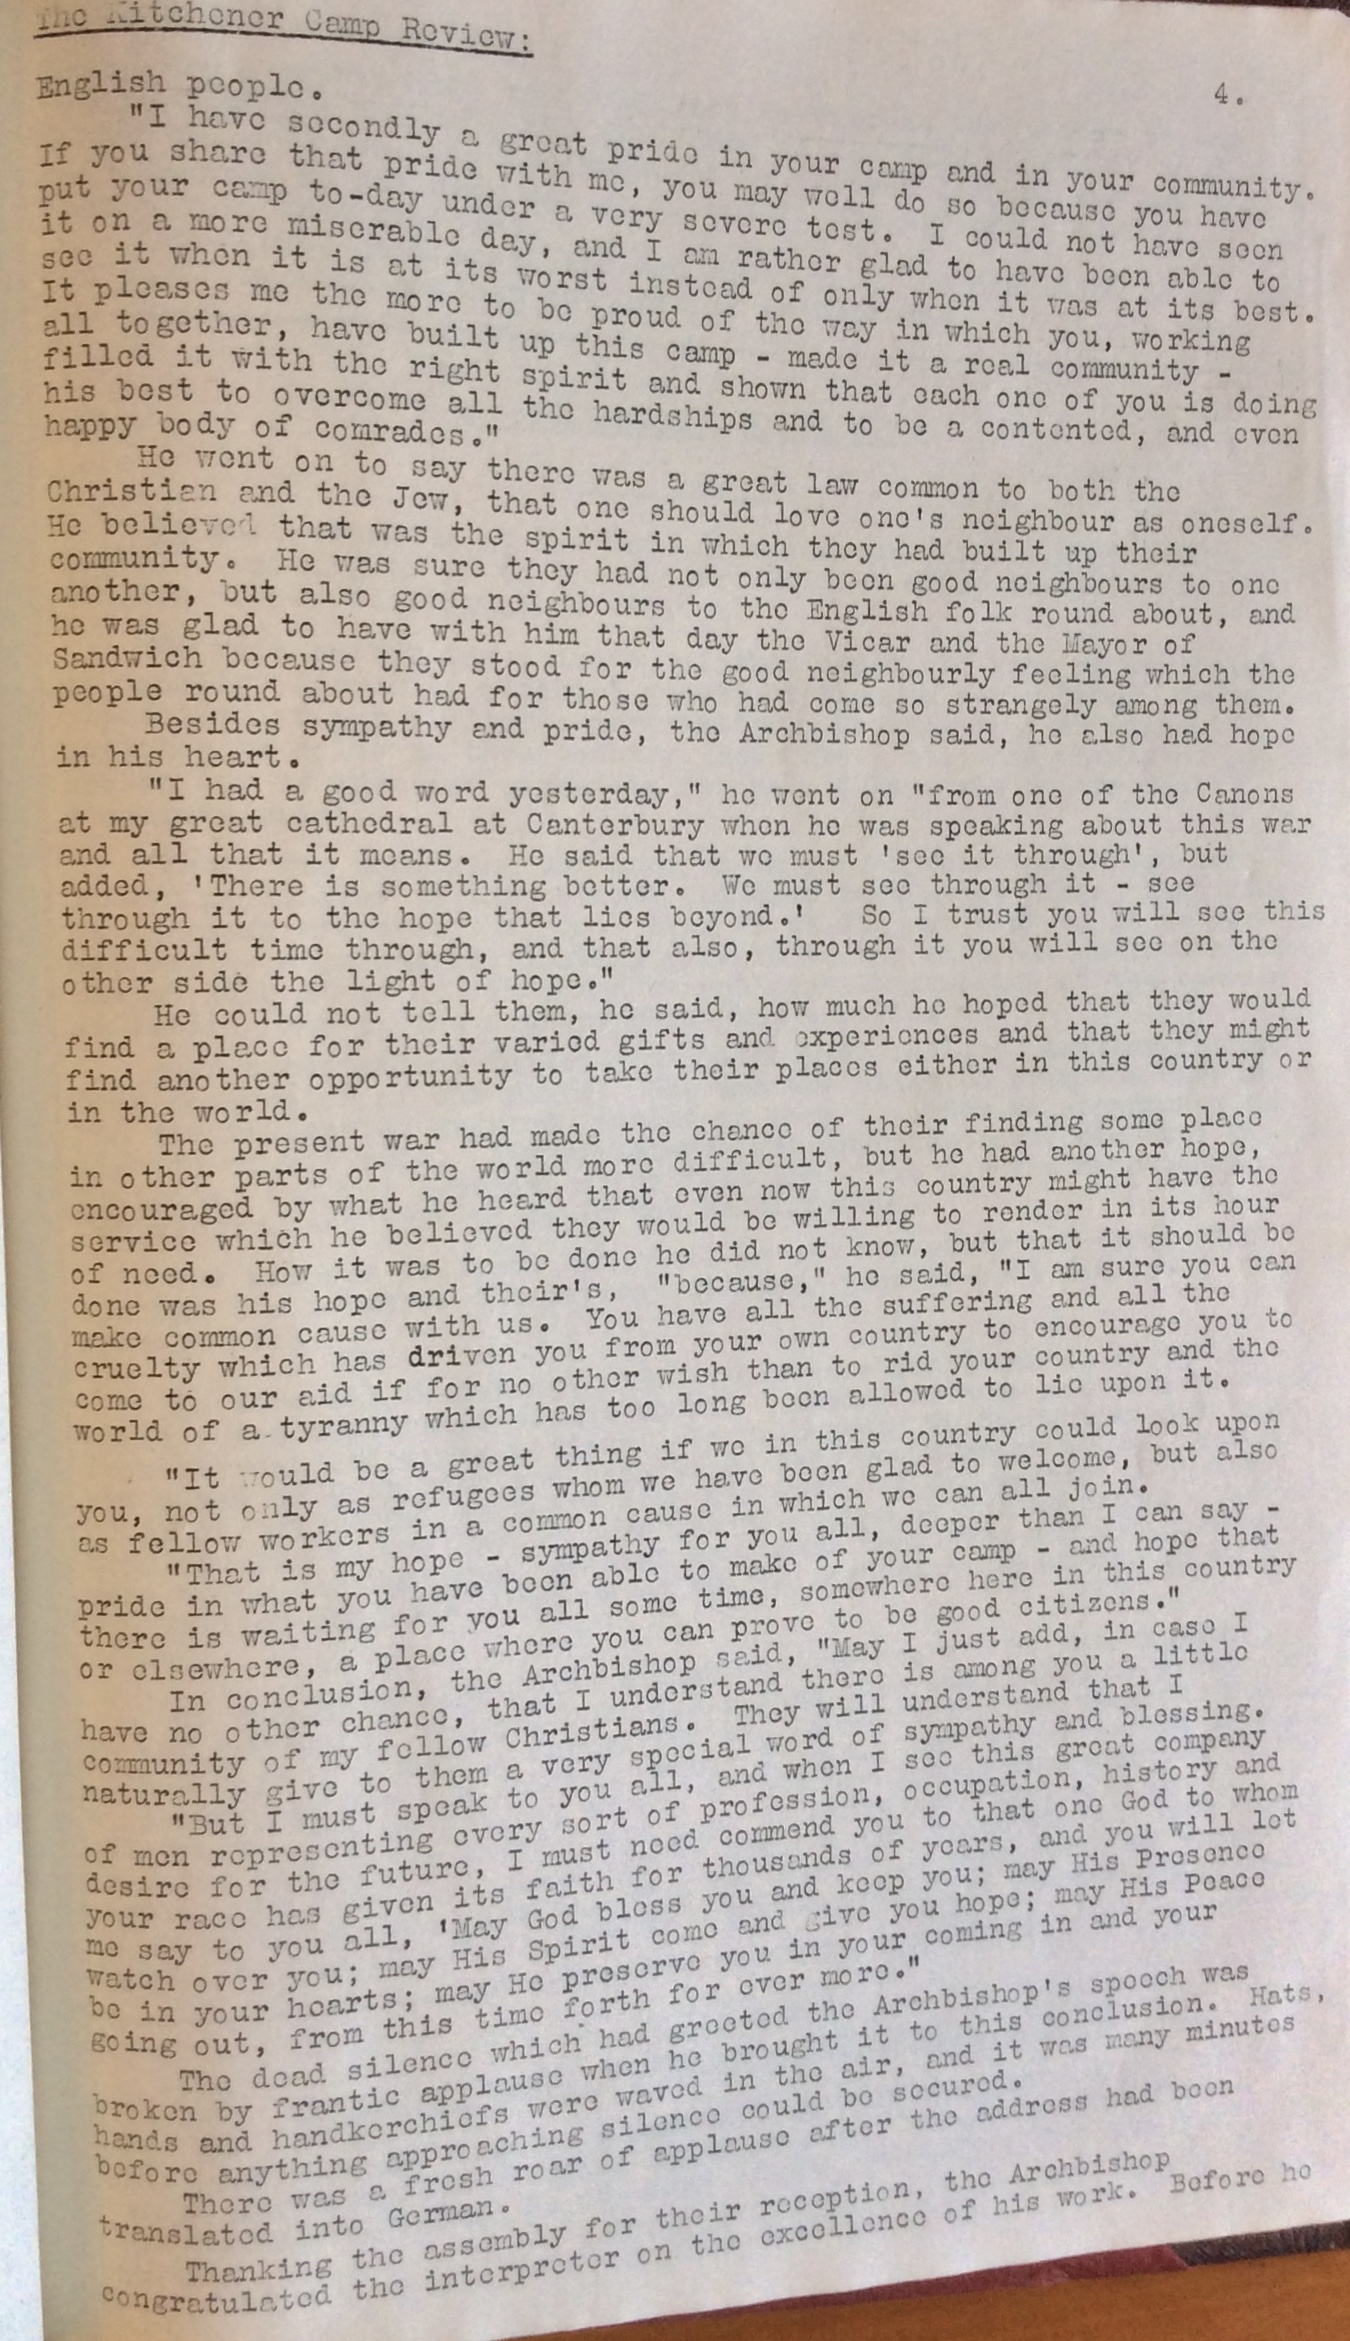 Kitchener Camp Review, November 1939, page 4